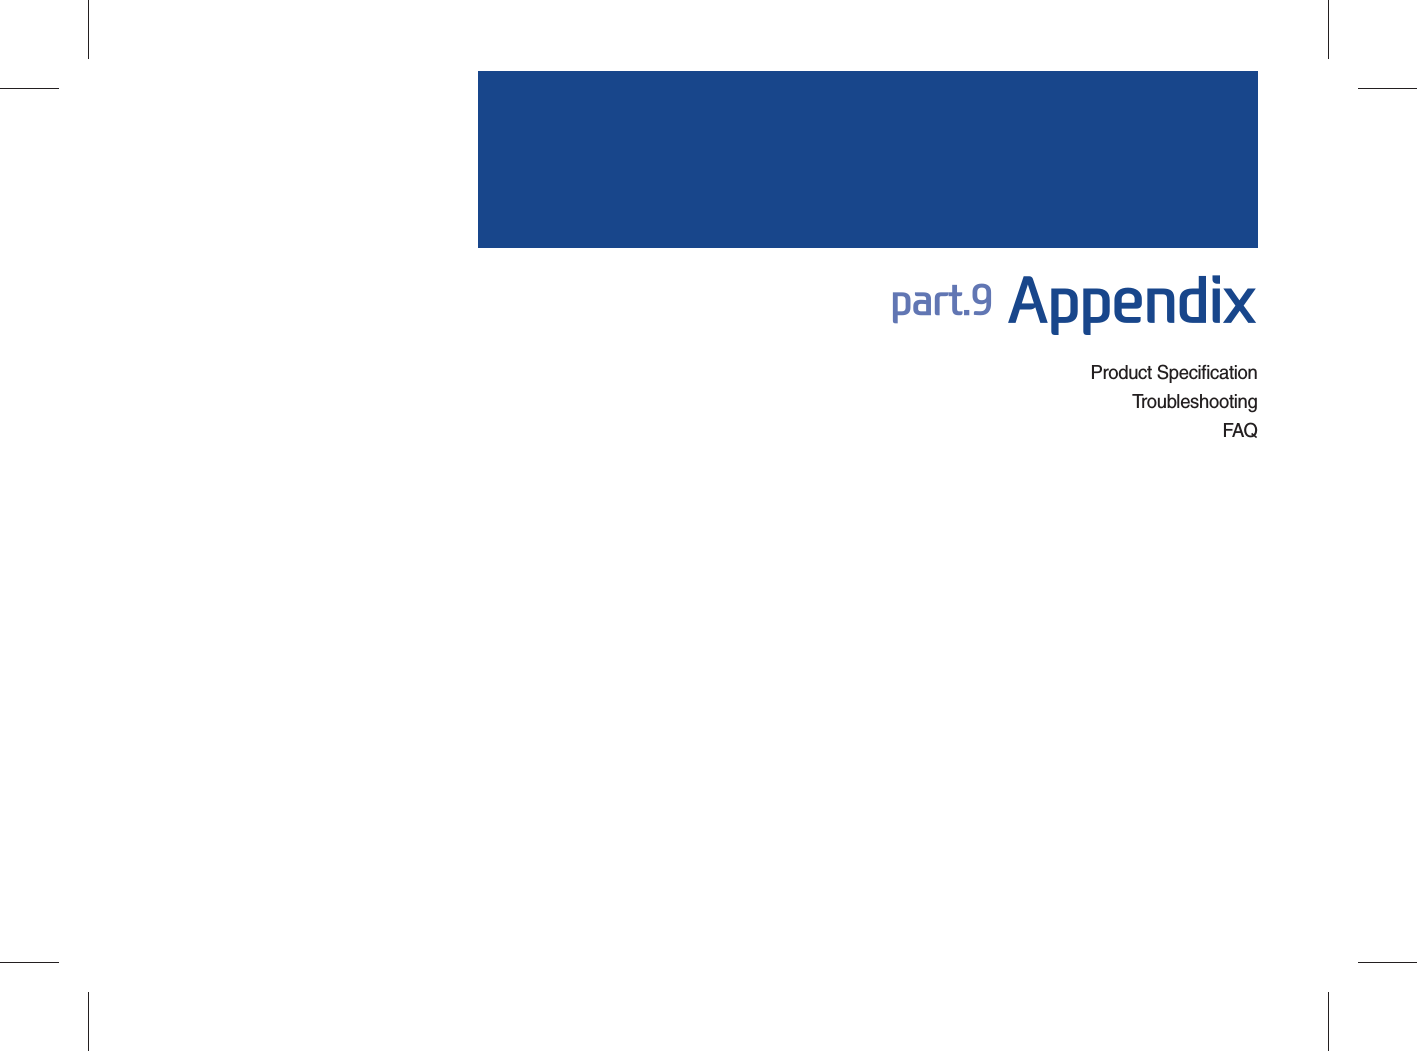 Product Specification TroubleshootingFAQpart.9 Appendix